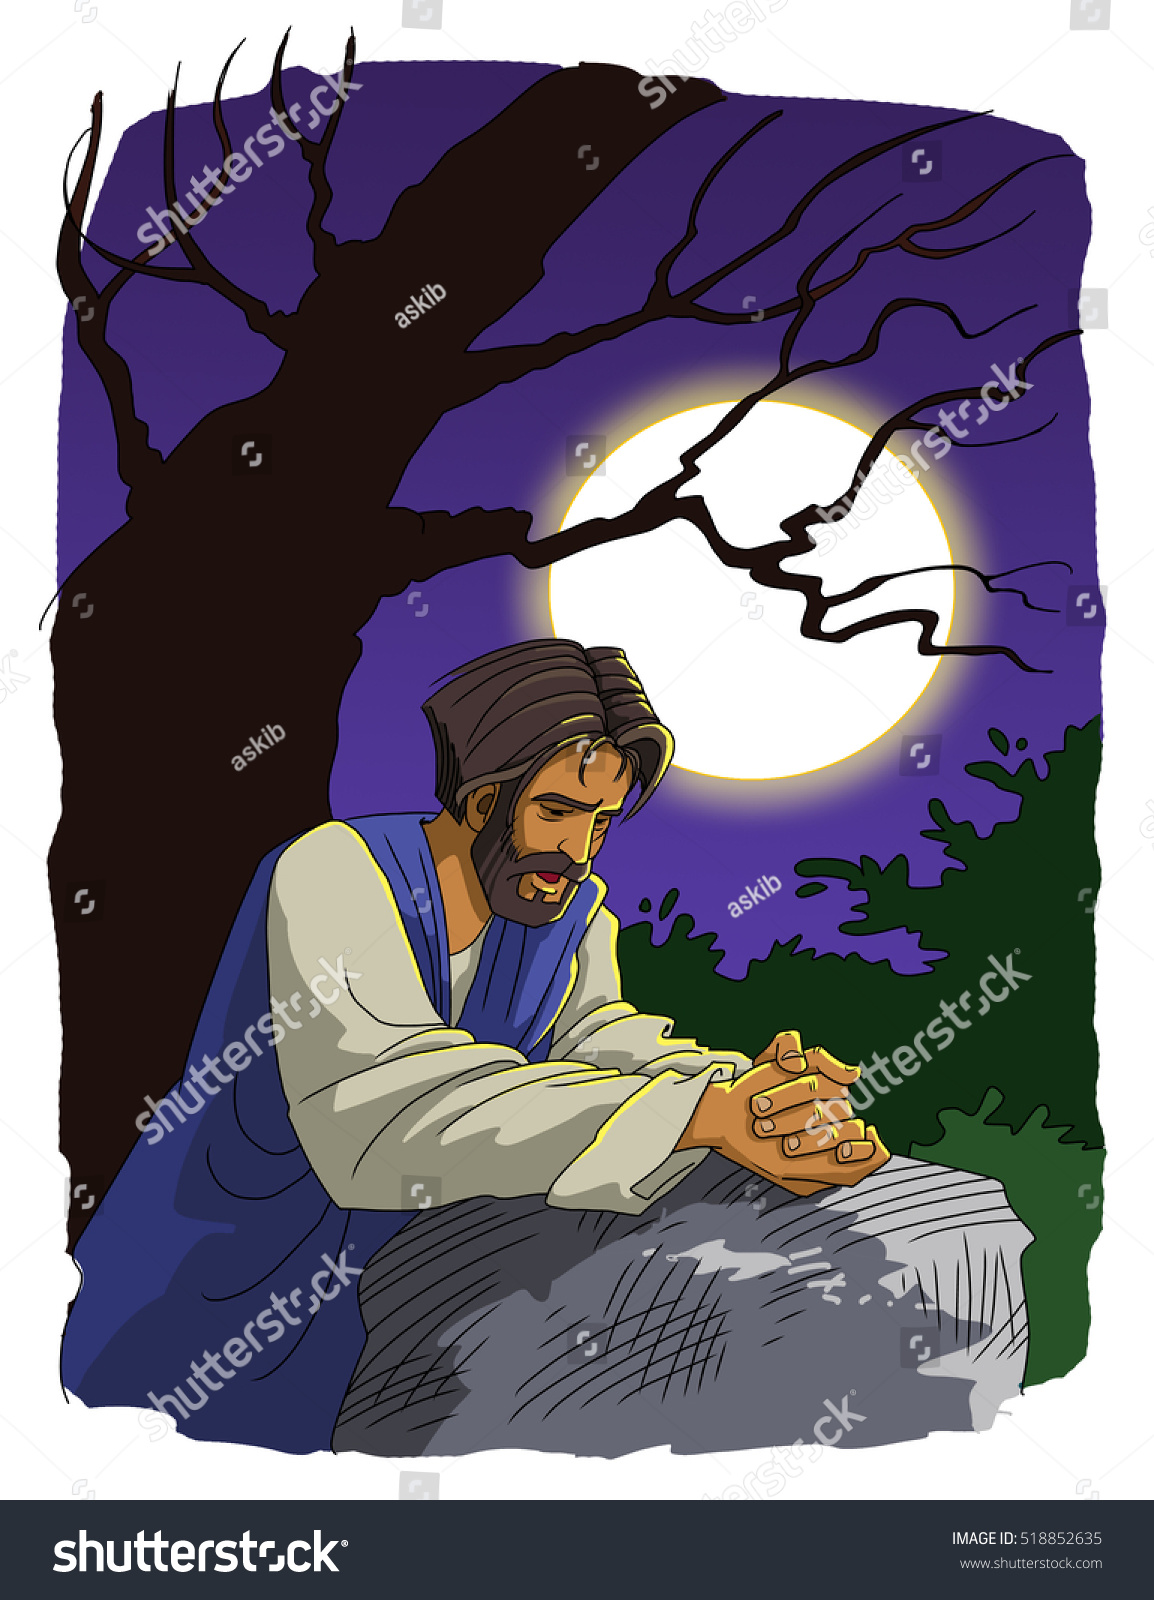 jesus christ praying in the garden of gethsemane